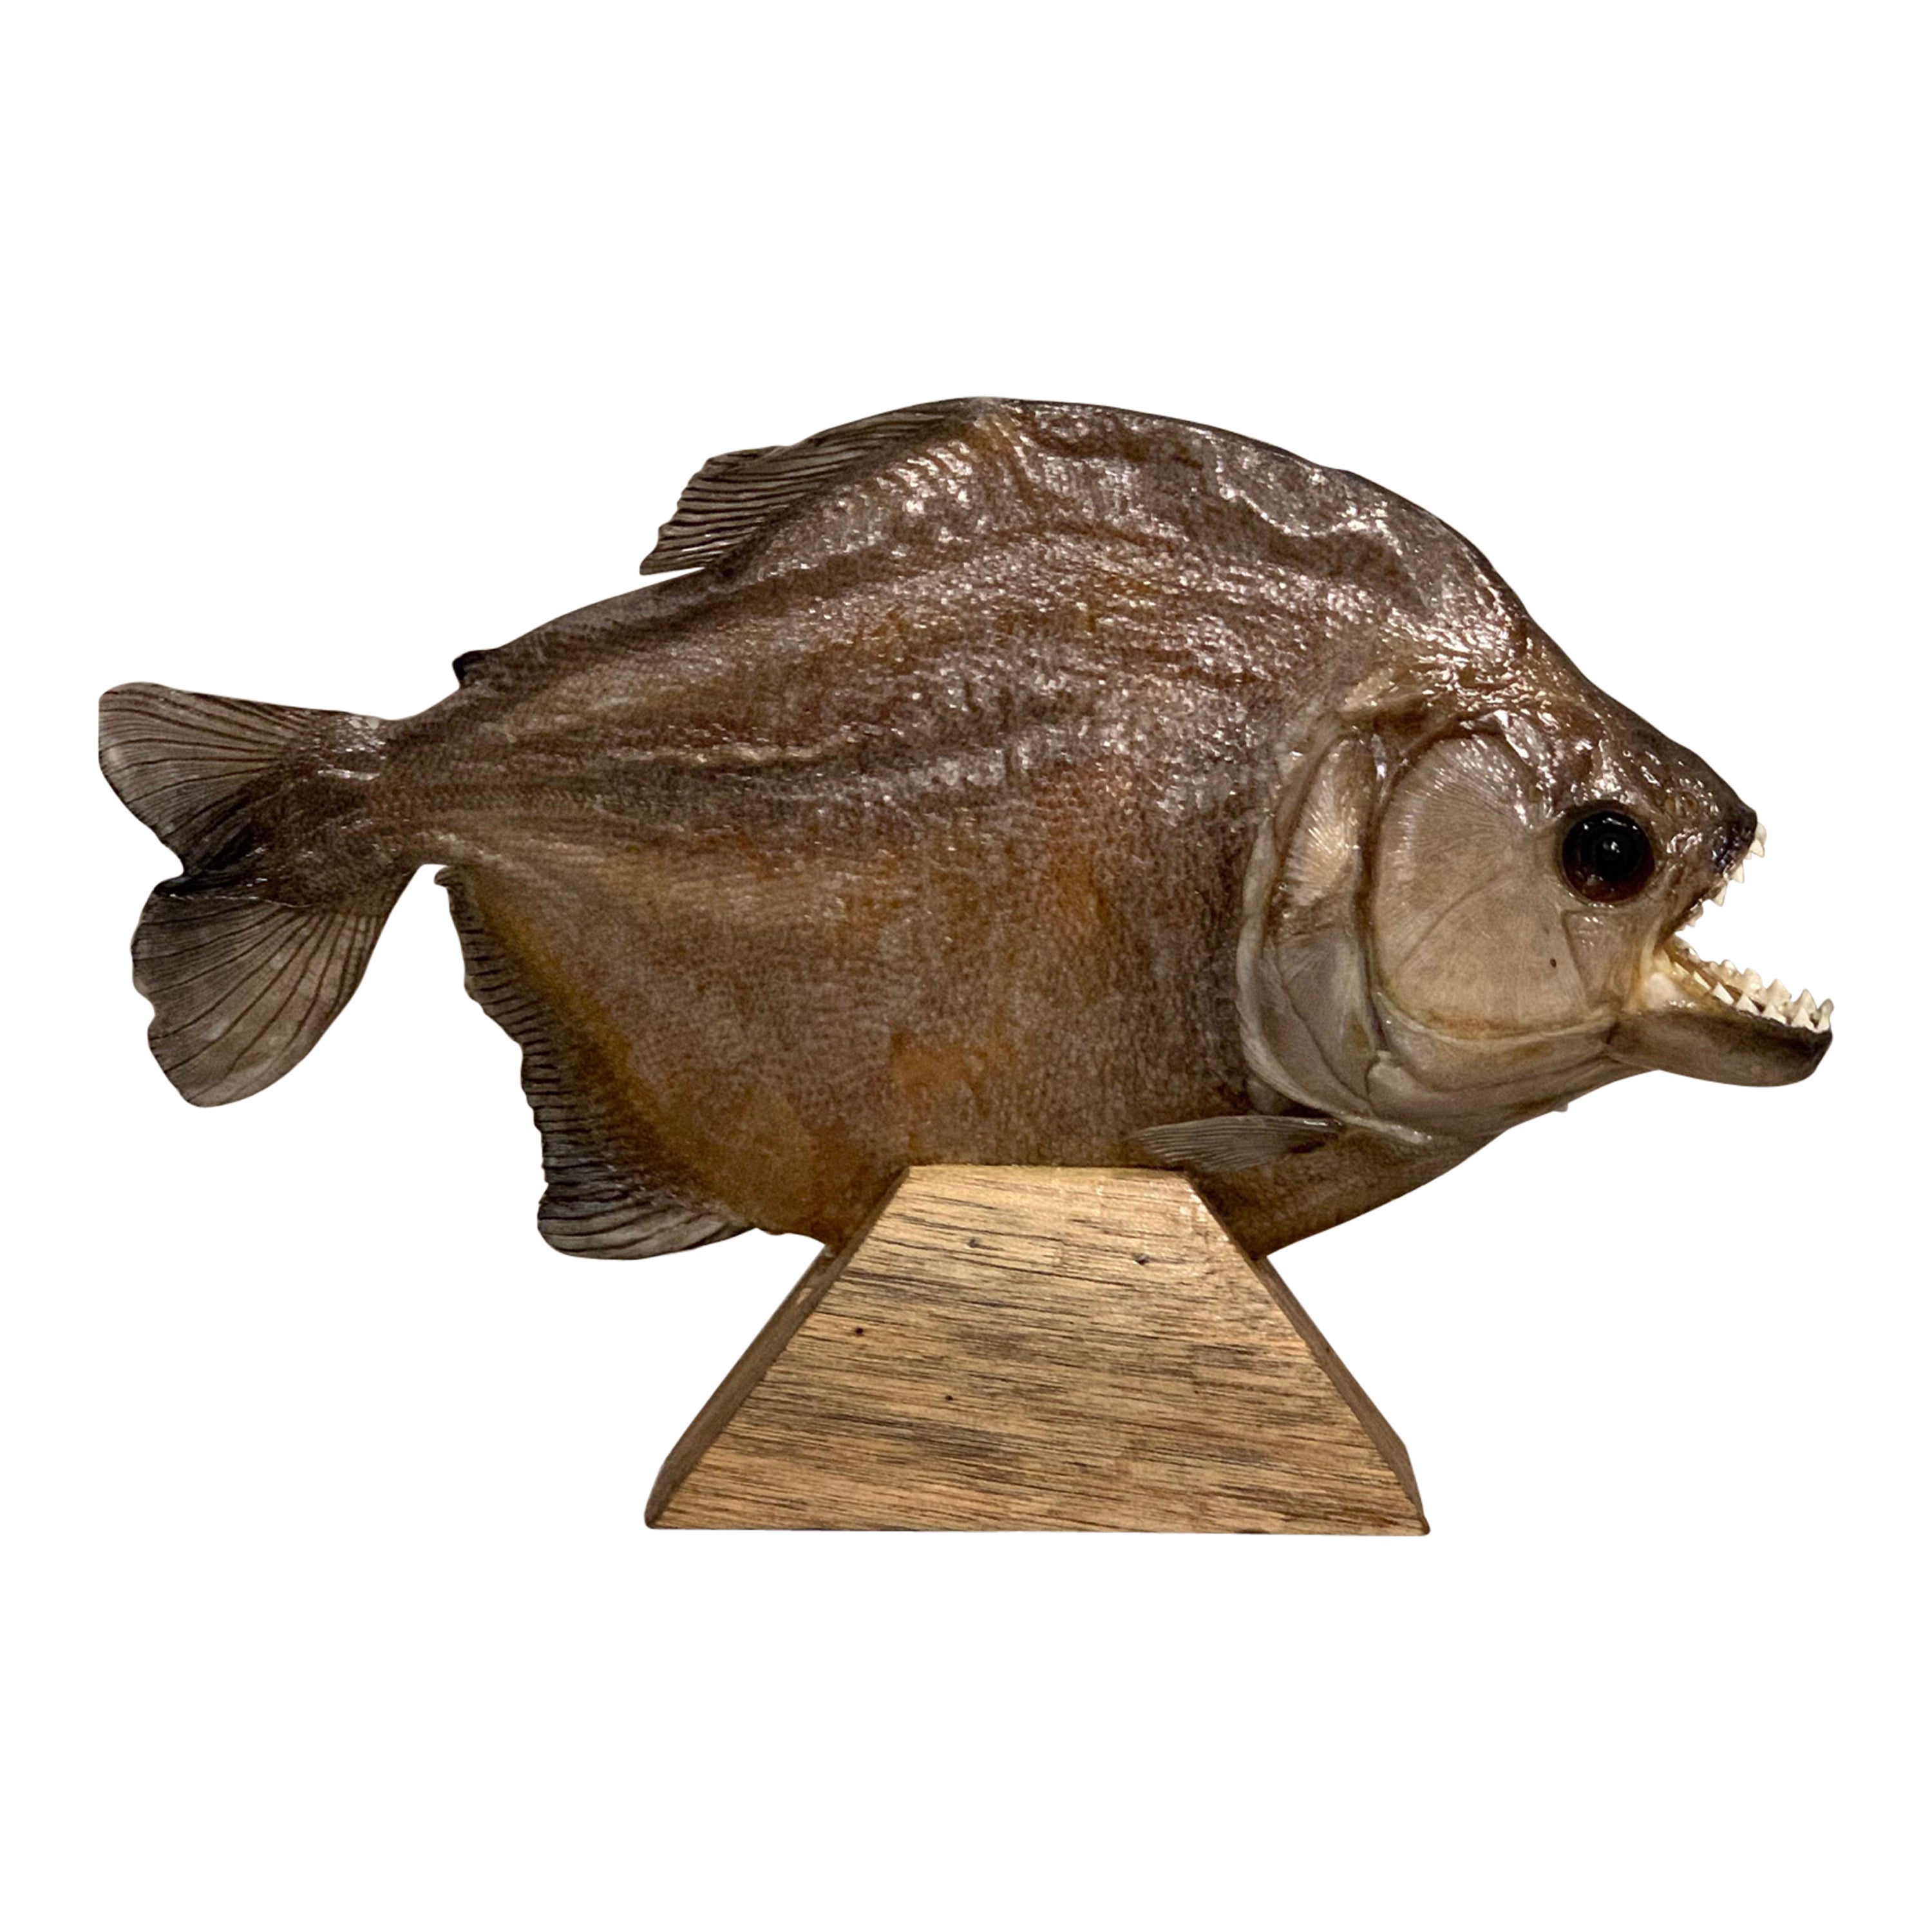 Taxidermy, Large Piranha on Wooden Stand, Piranha